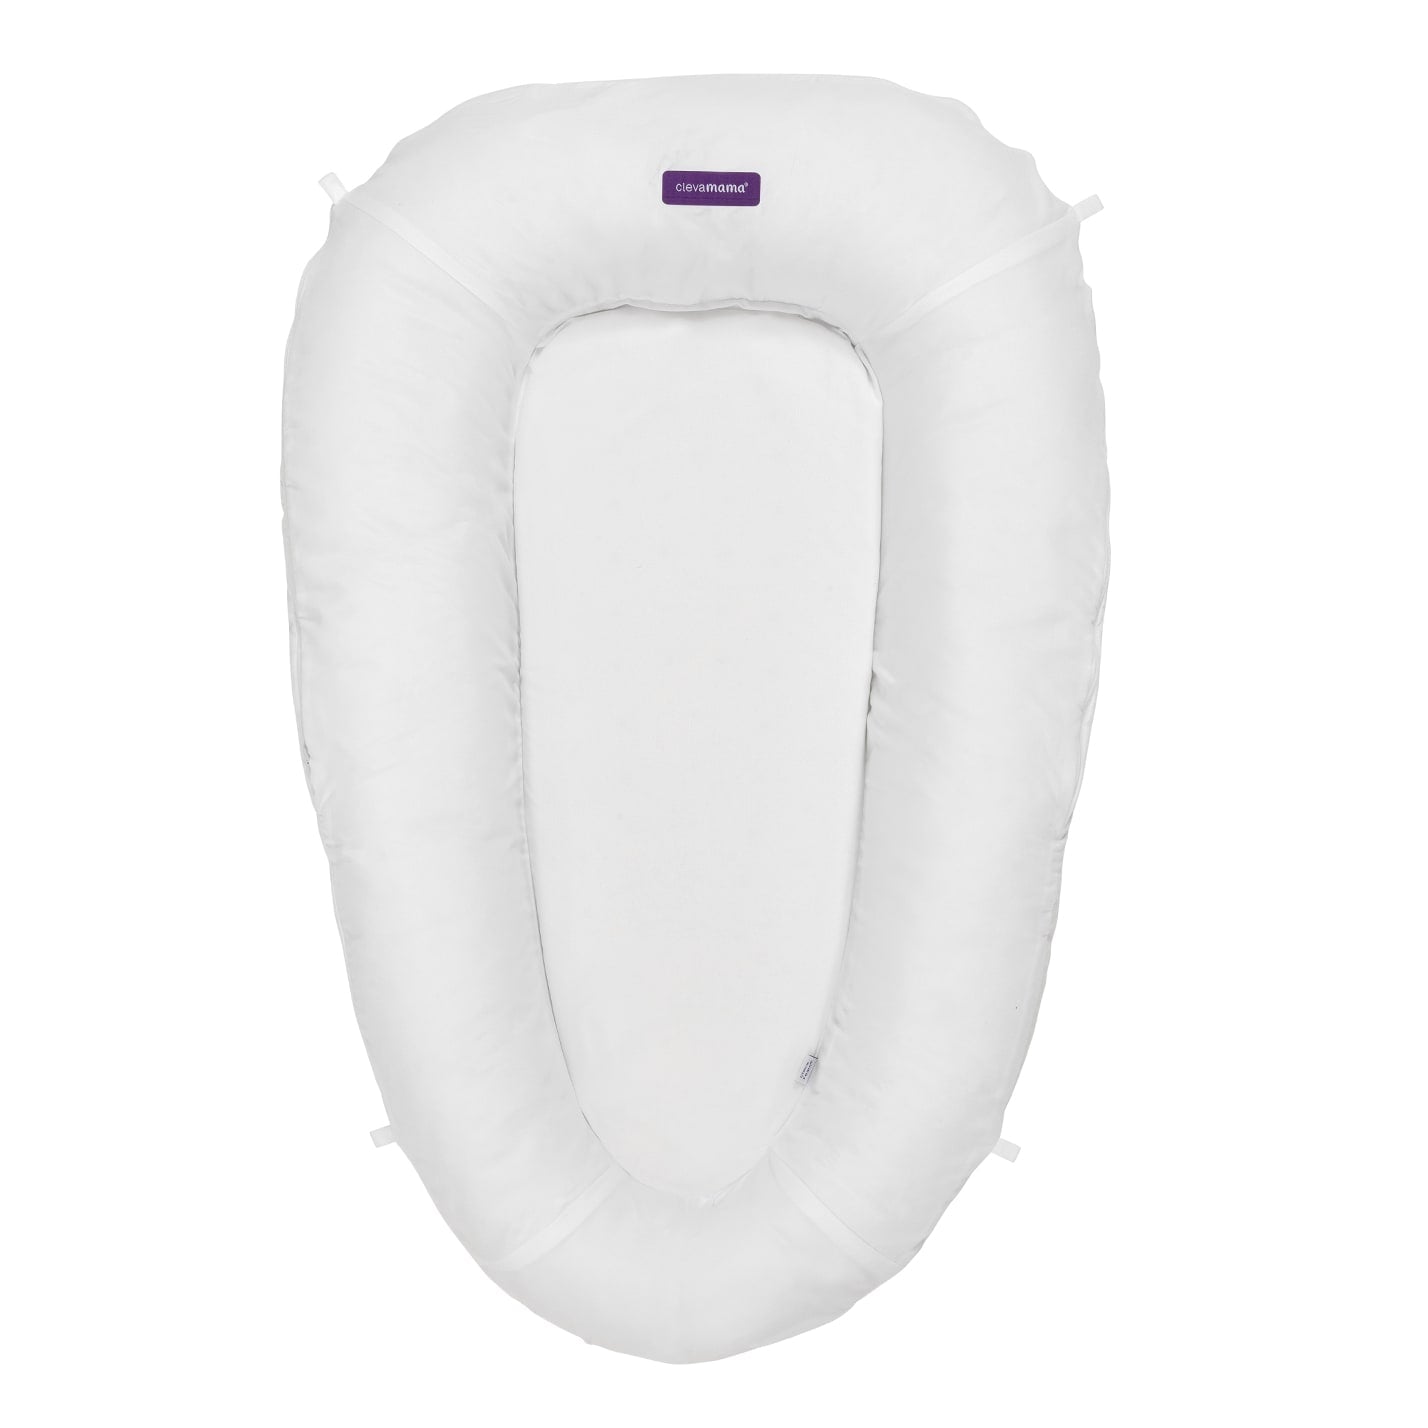 ClevaFoam® Baby Pod- White (0-6m)